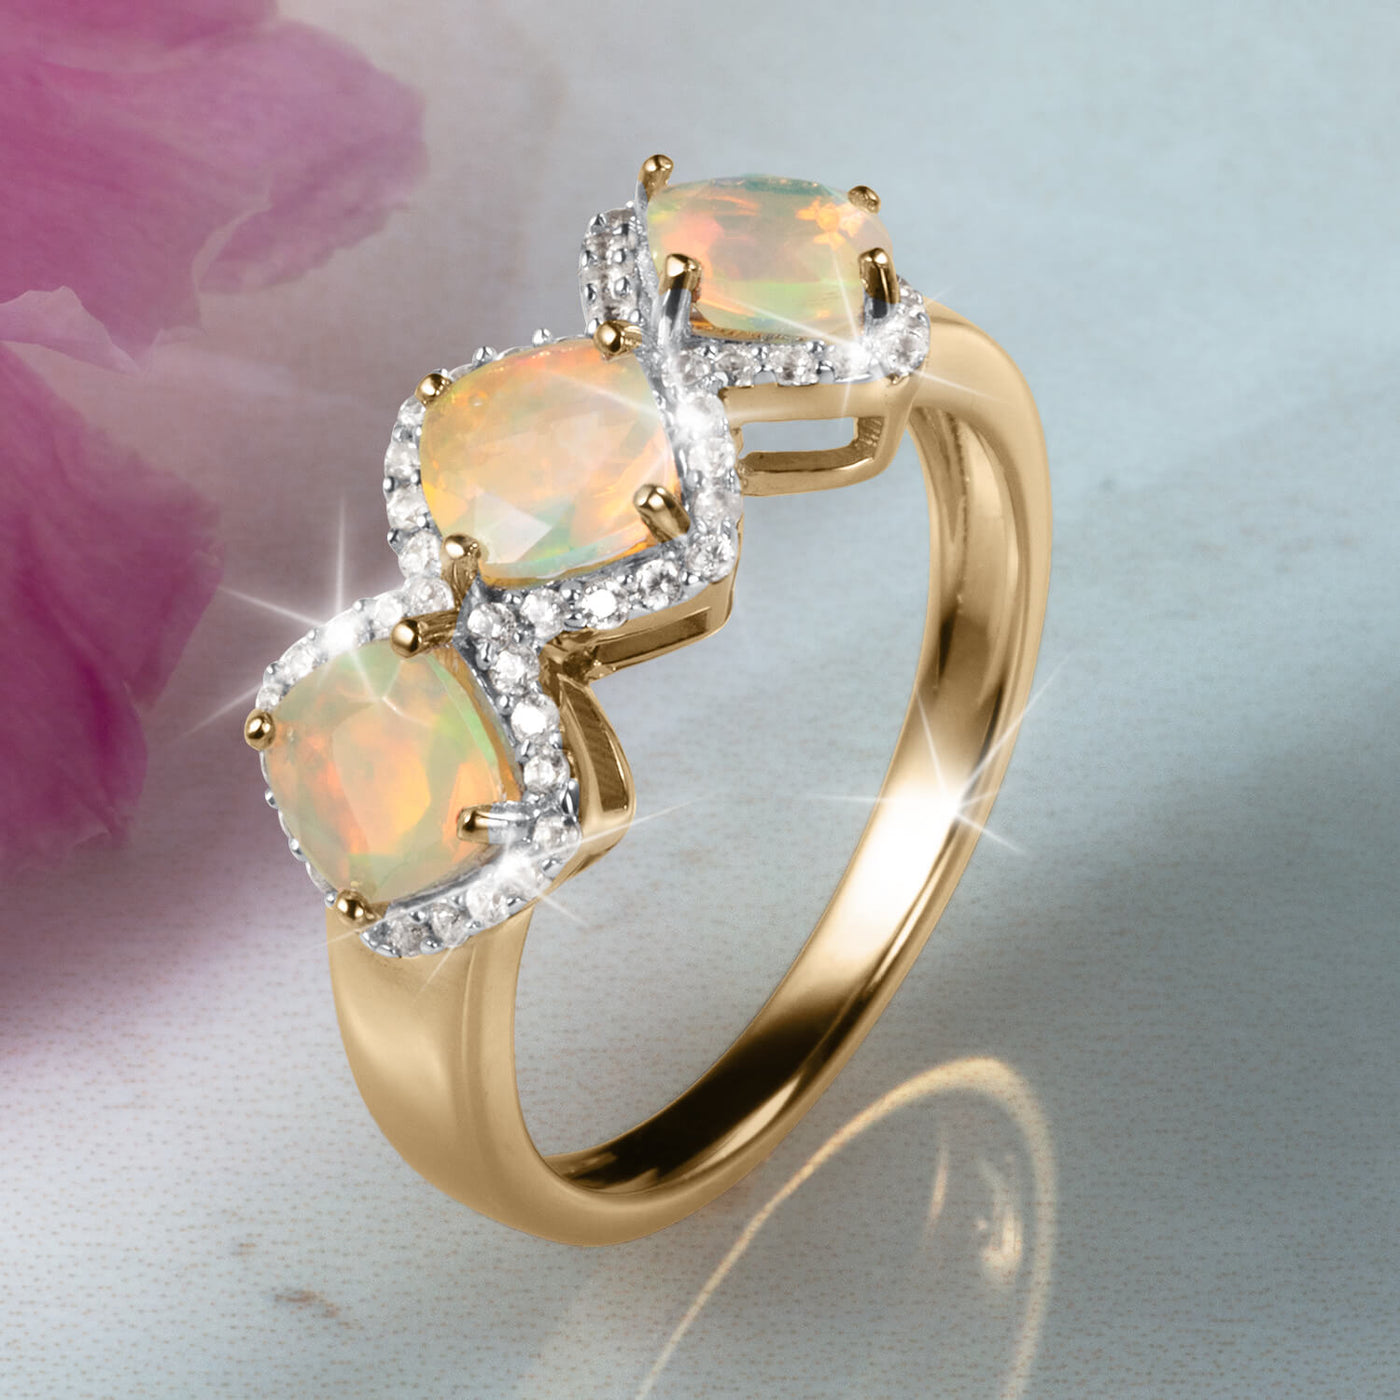 Daniel Steiger Celestial Opal Ladies Ring